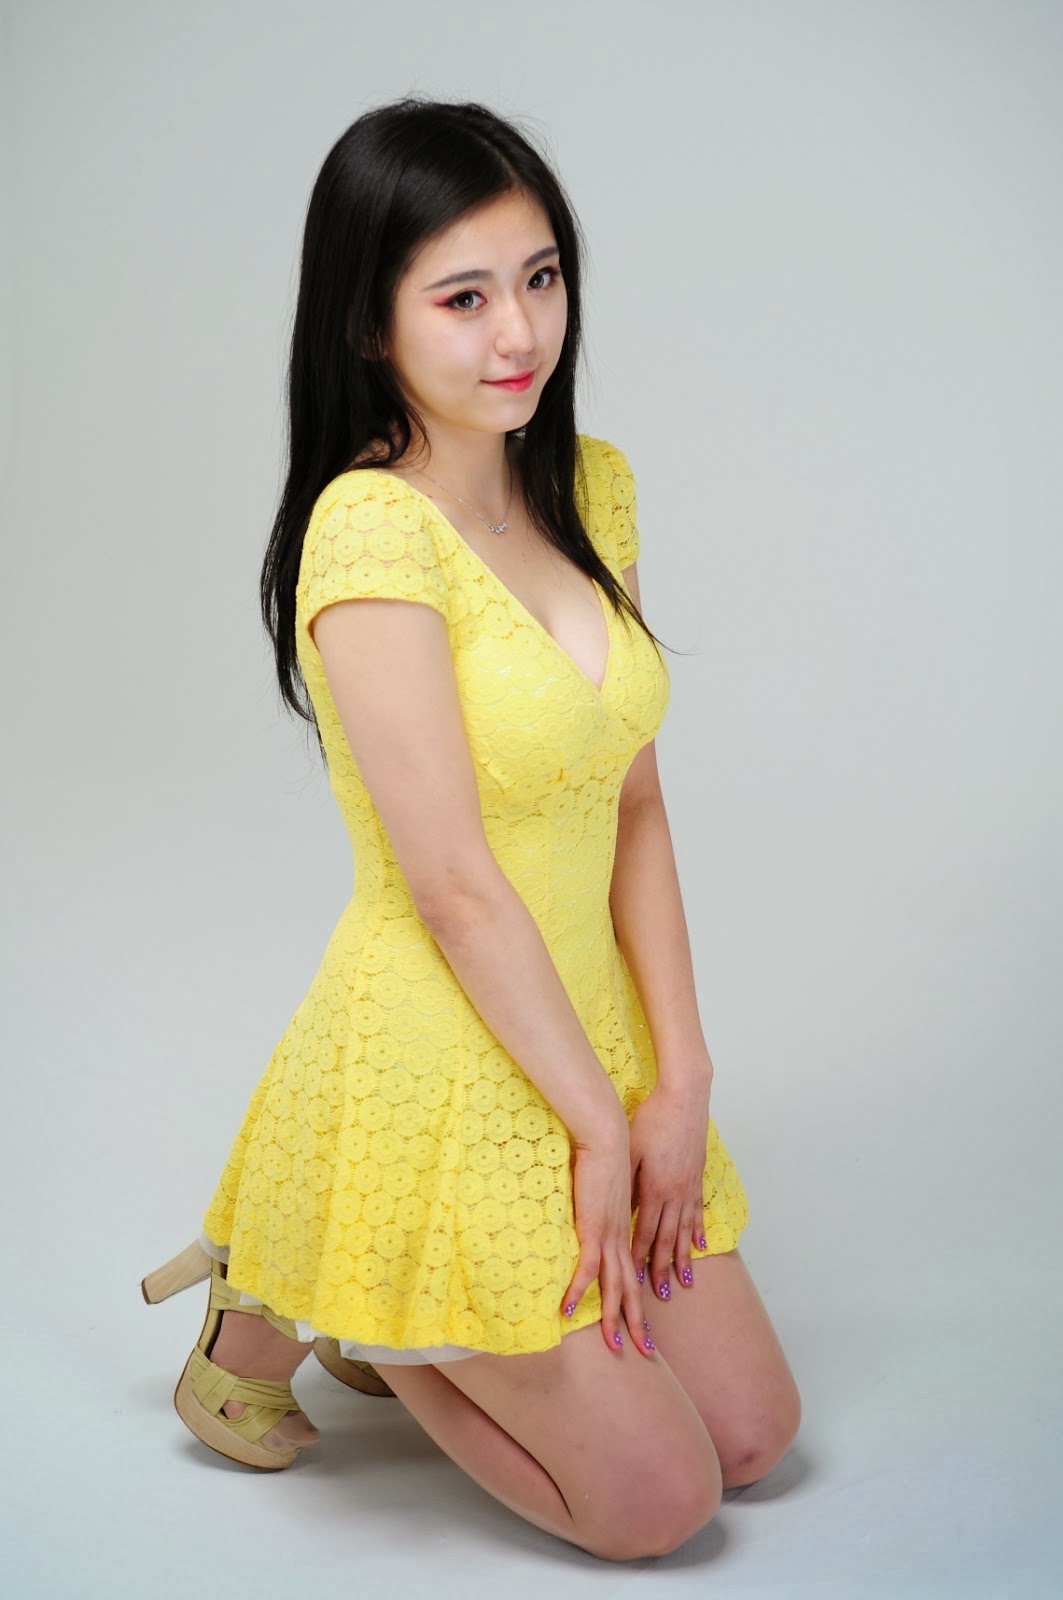 Cha Sun Hwa Koreany Model  Foto Bugil 2016